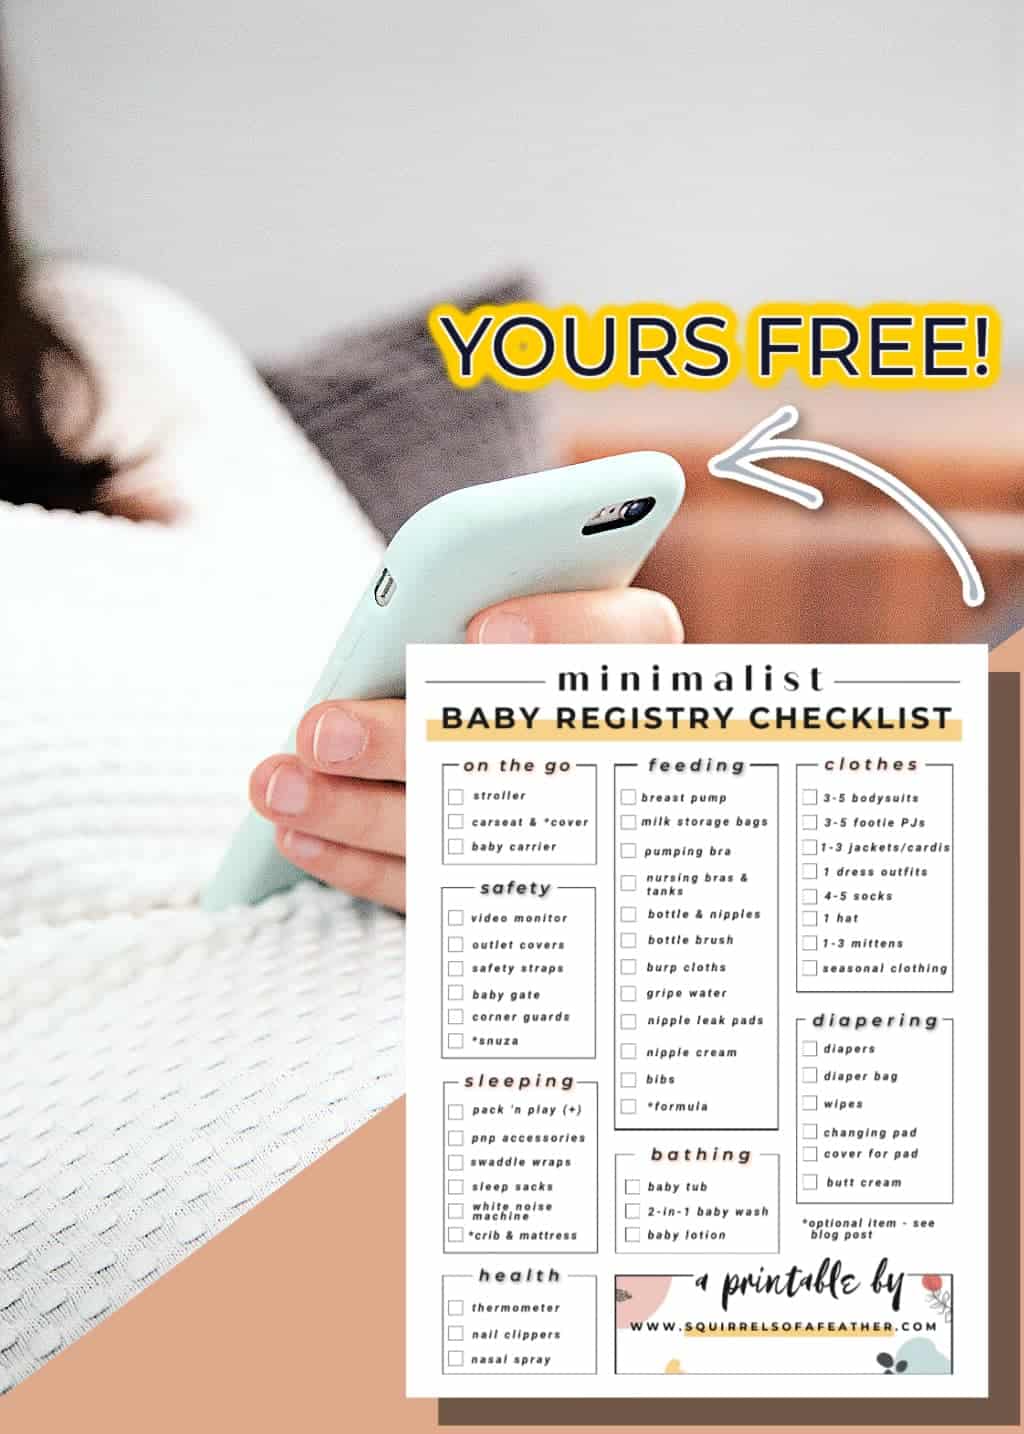 The Ultimate Planning for Baby Checklist! - Healthy Mama Hacks  Newborn  baby needs, Newborn checklist baby essentials, Baby essential checklist